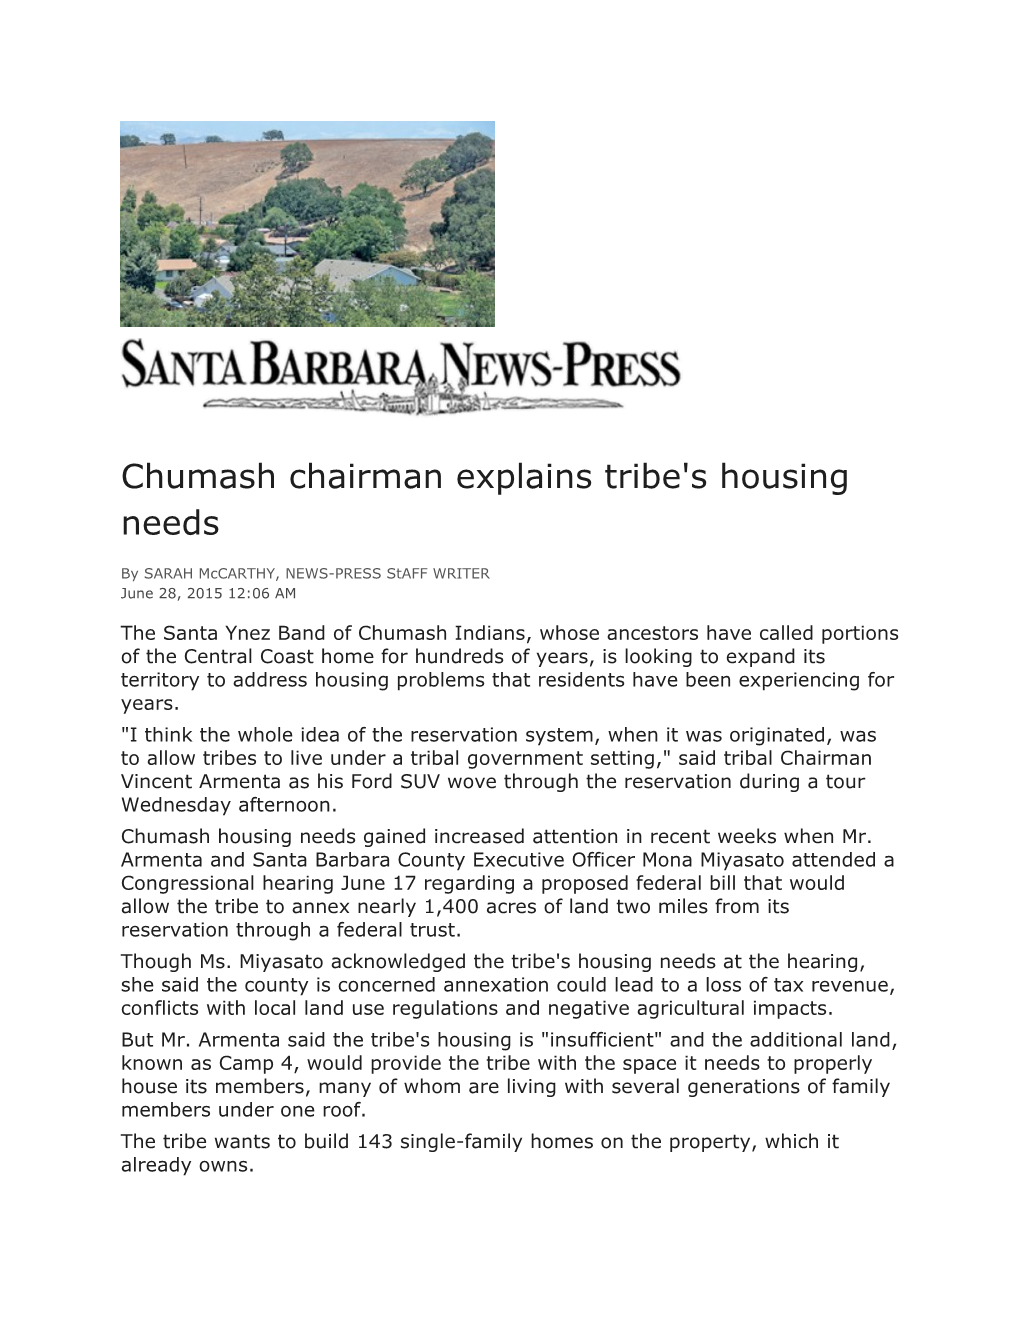 Chumash Chairman Explains Tribe's Housing Needs